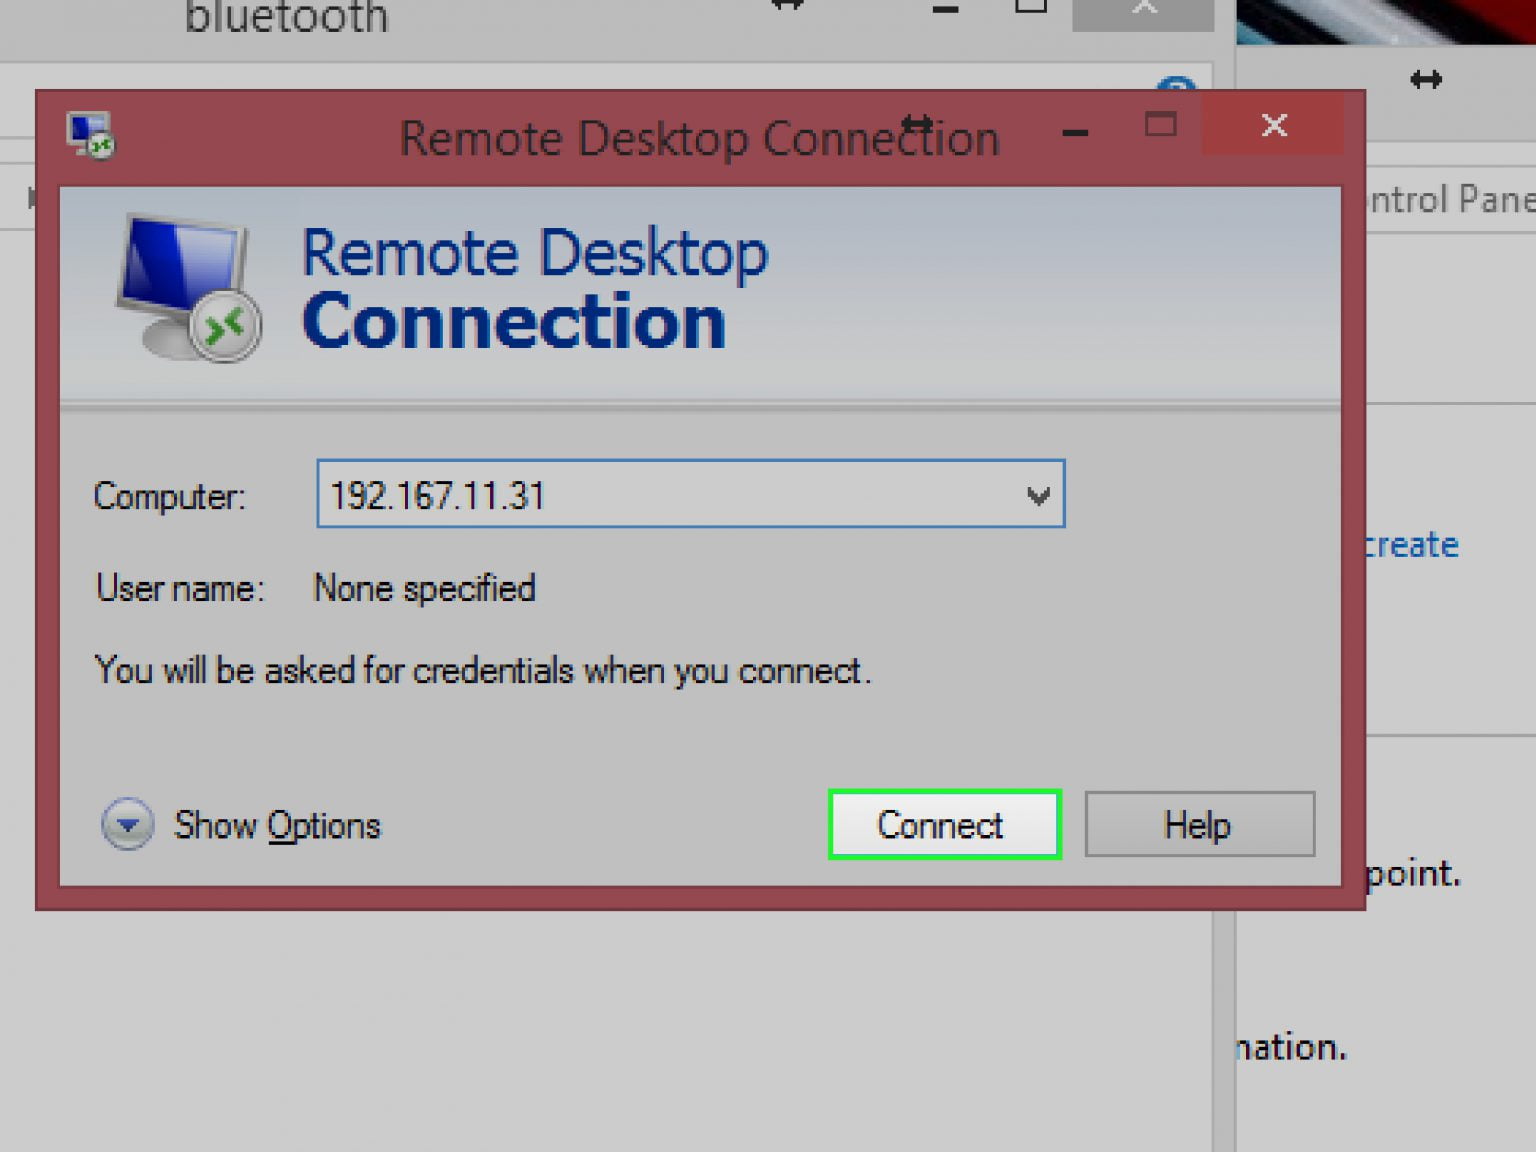 remote desktop connection 2.7 download